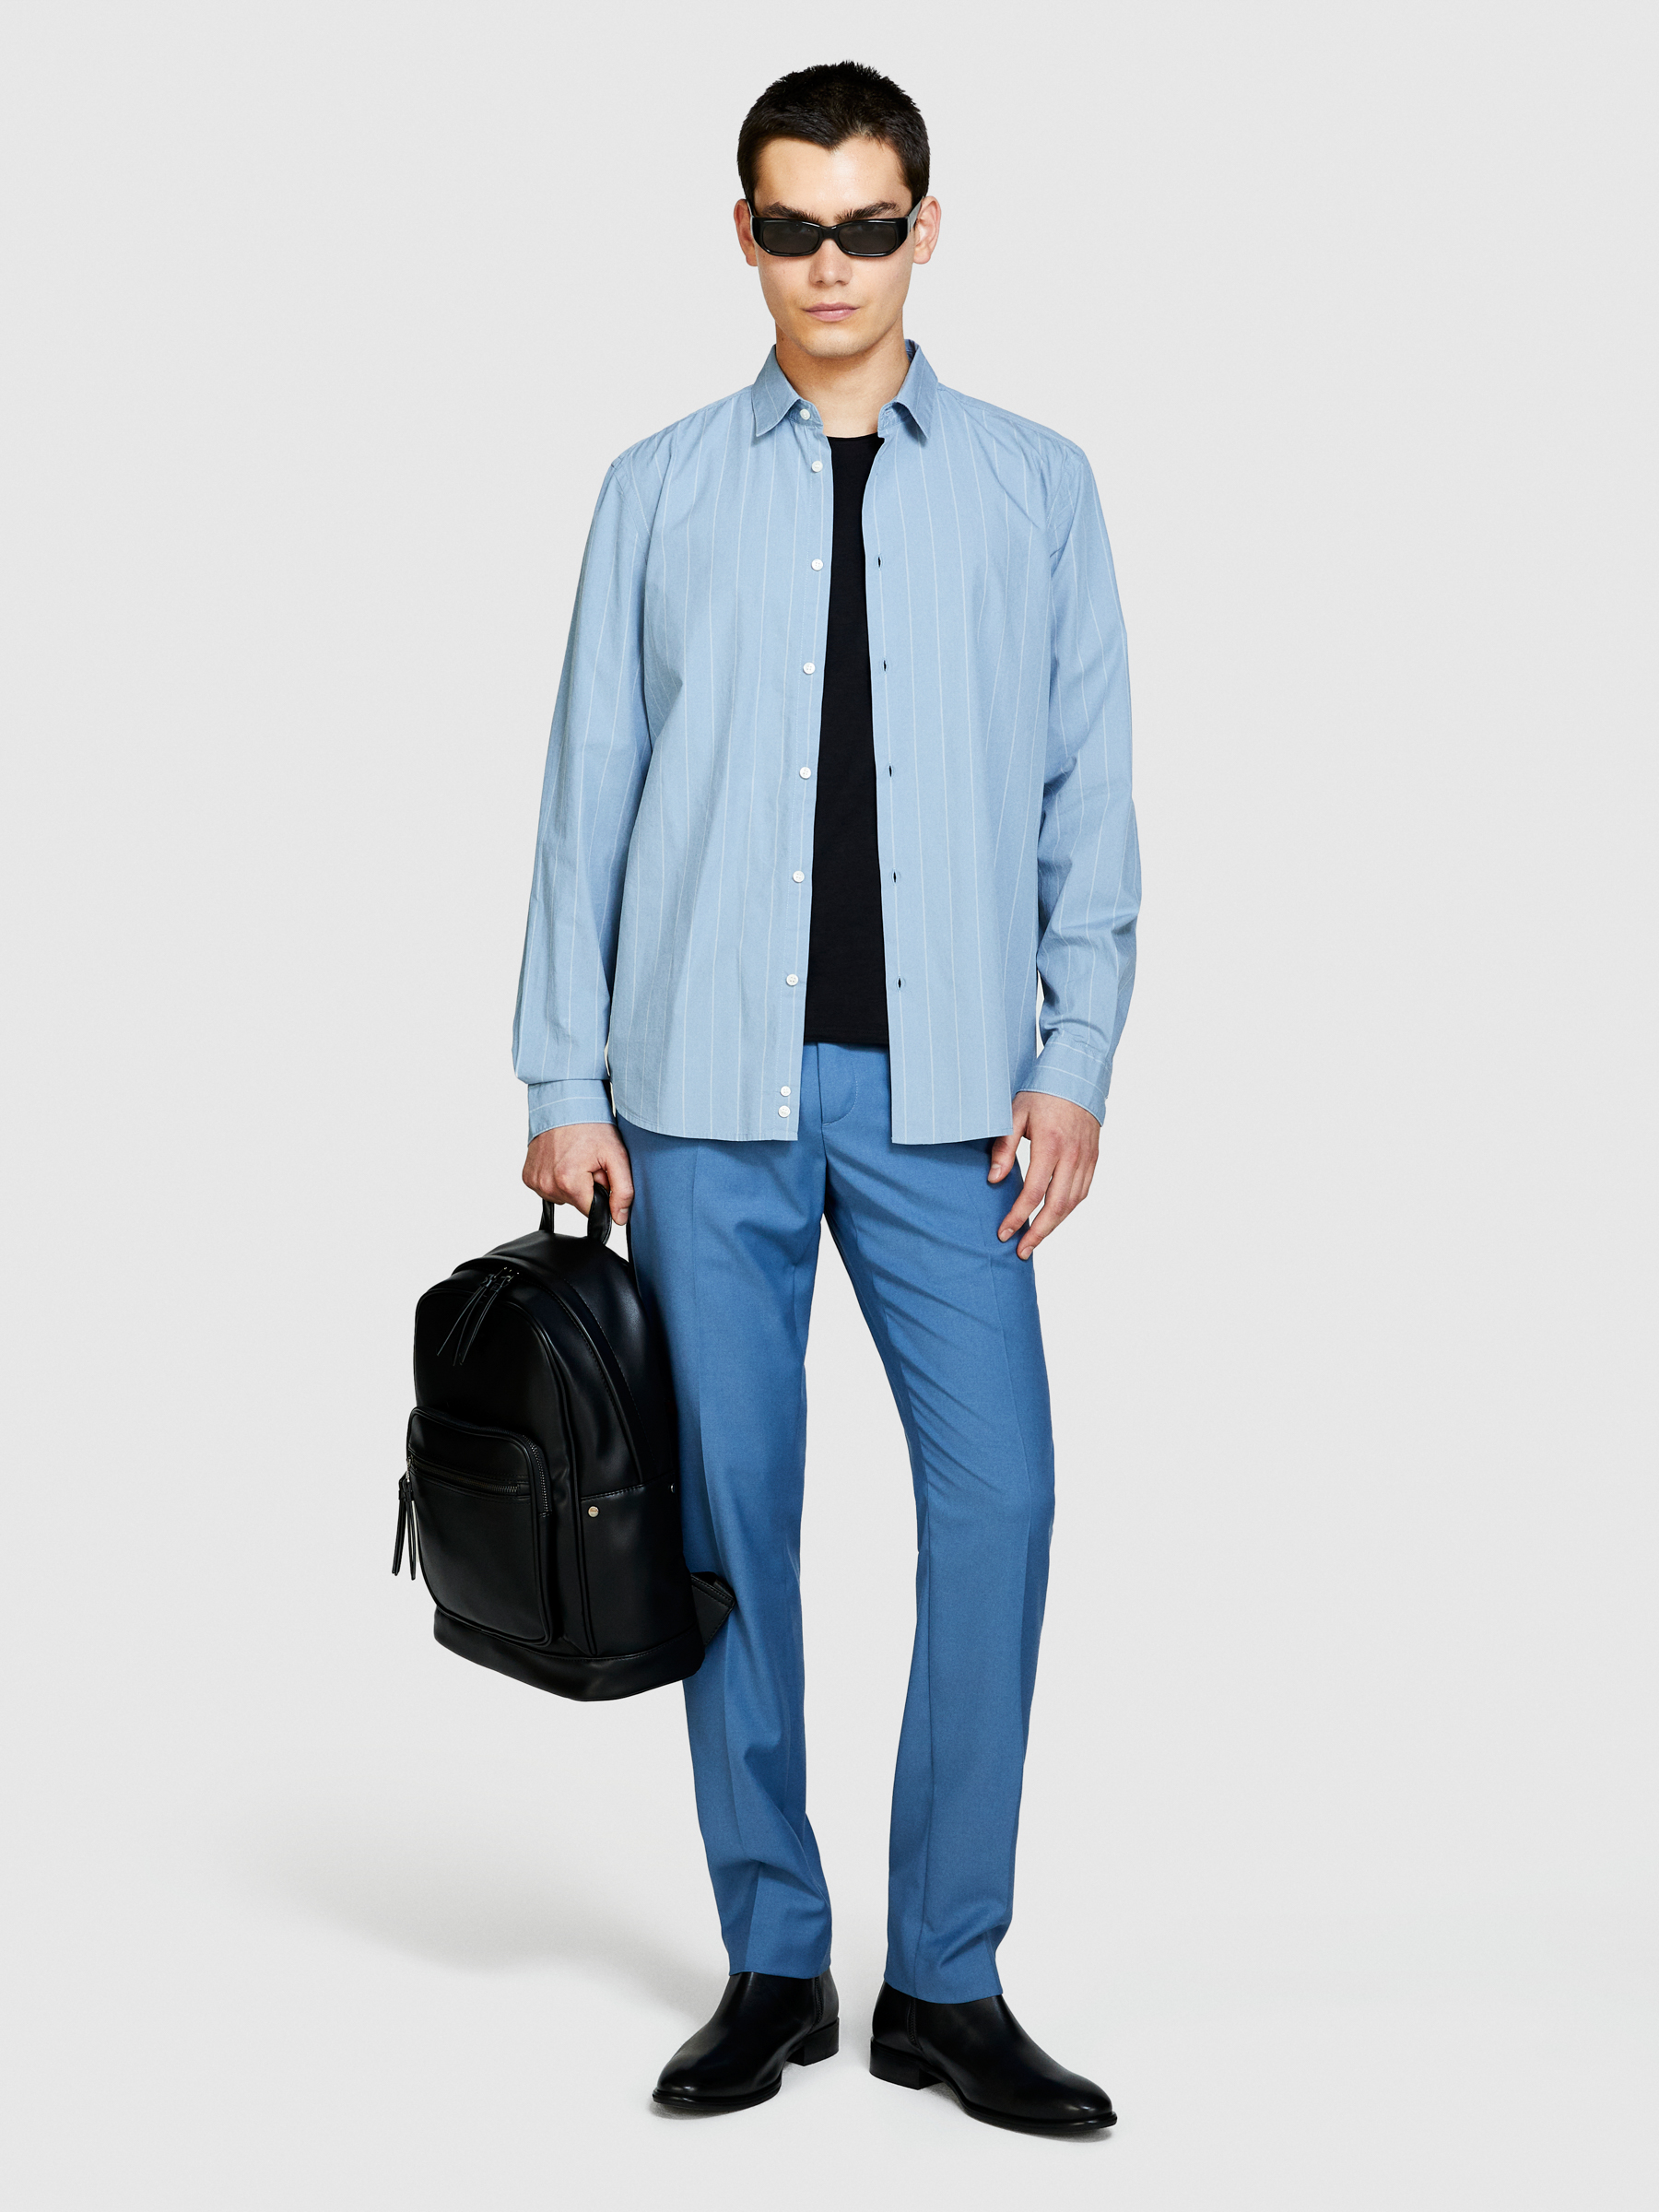 Sisley - Striped Shirt, Man, Light Blue, Size: 43